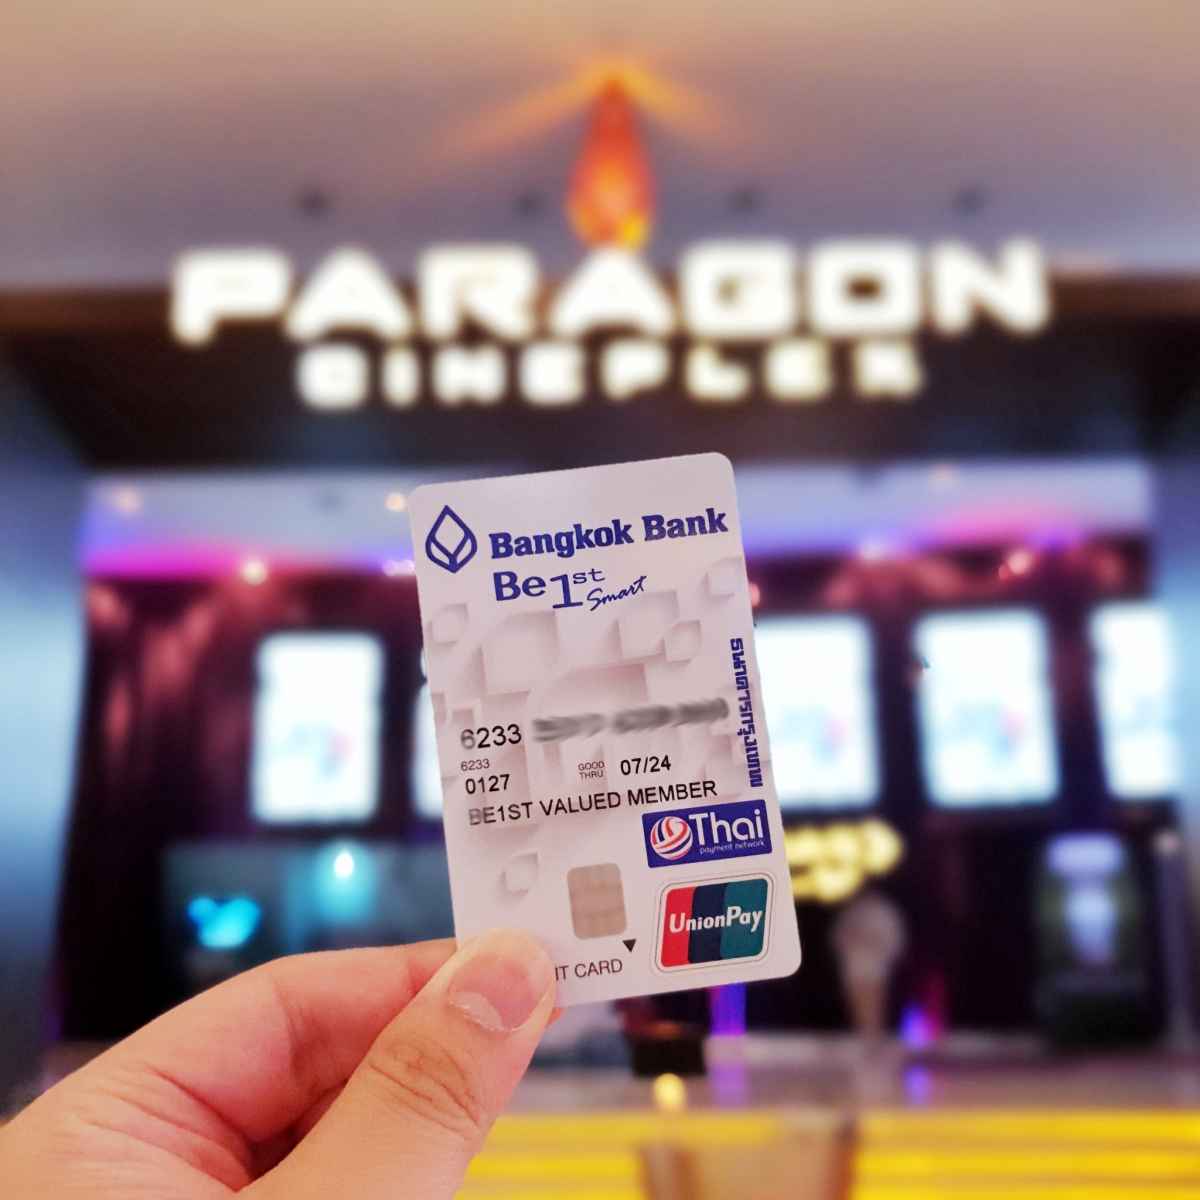 Paragon Cineplex